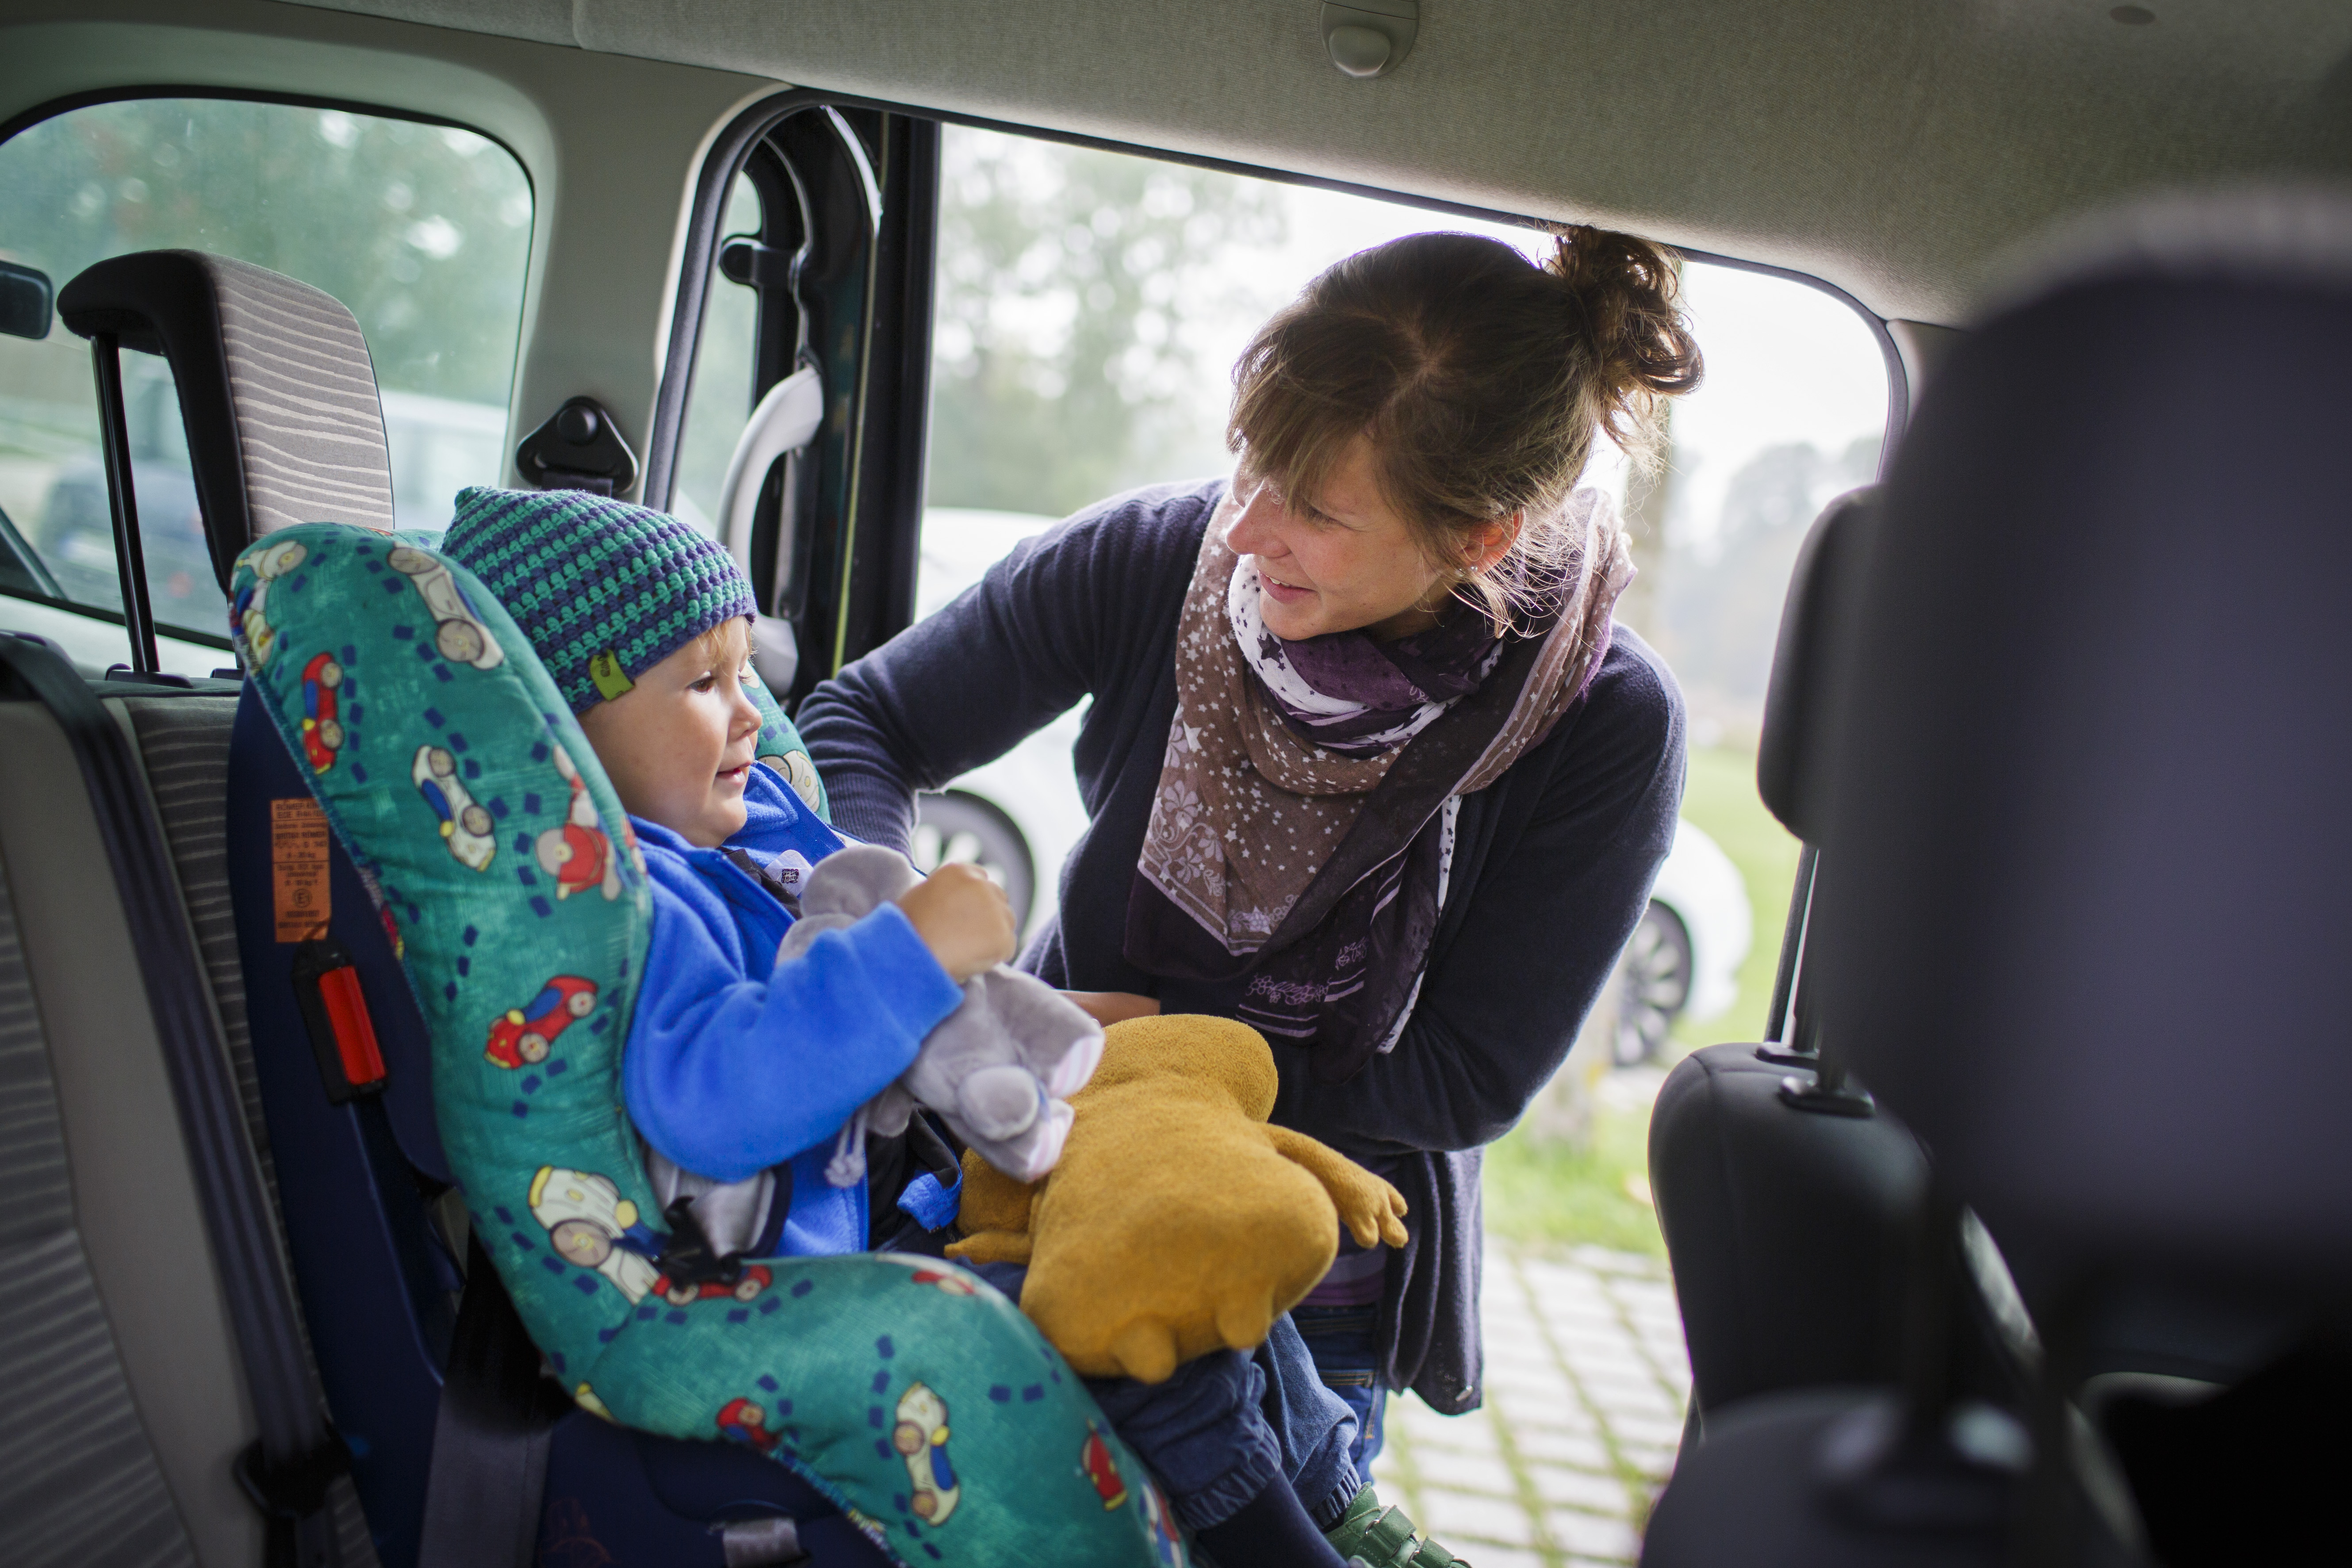 Car Seat Cushion, Plush, Warm and Antifreeze in Winter, Car Seat